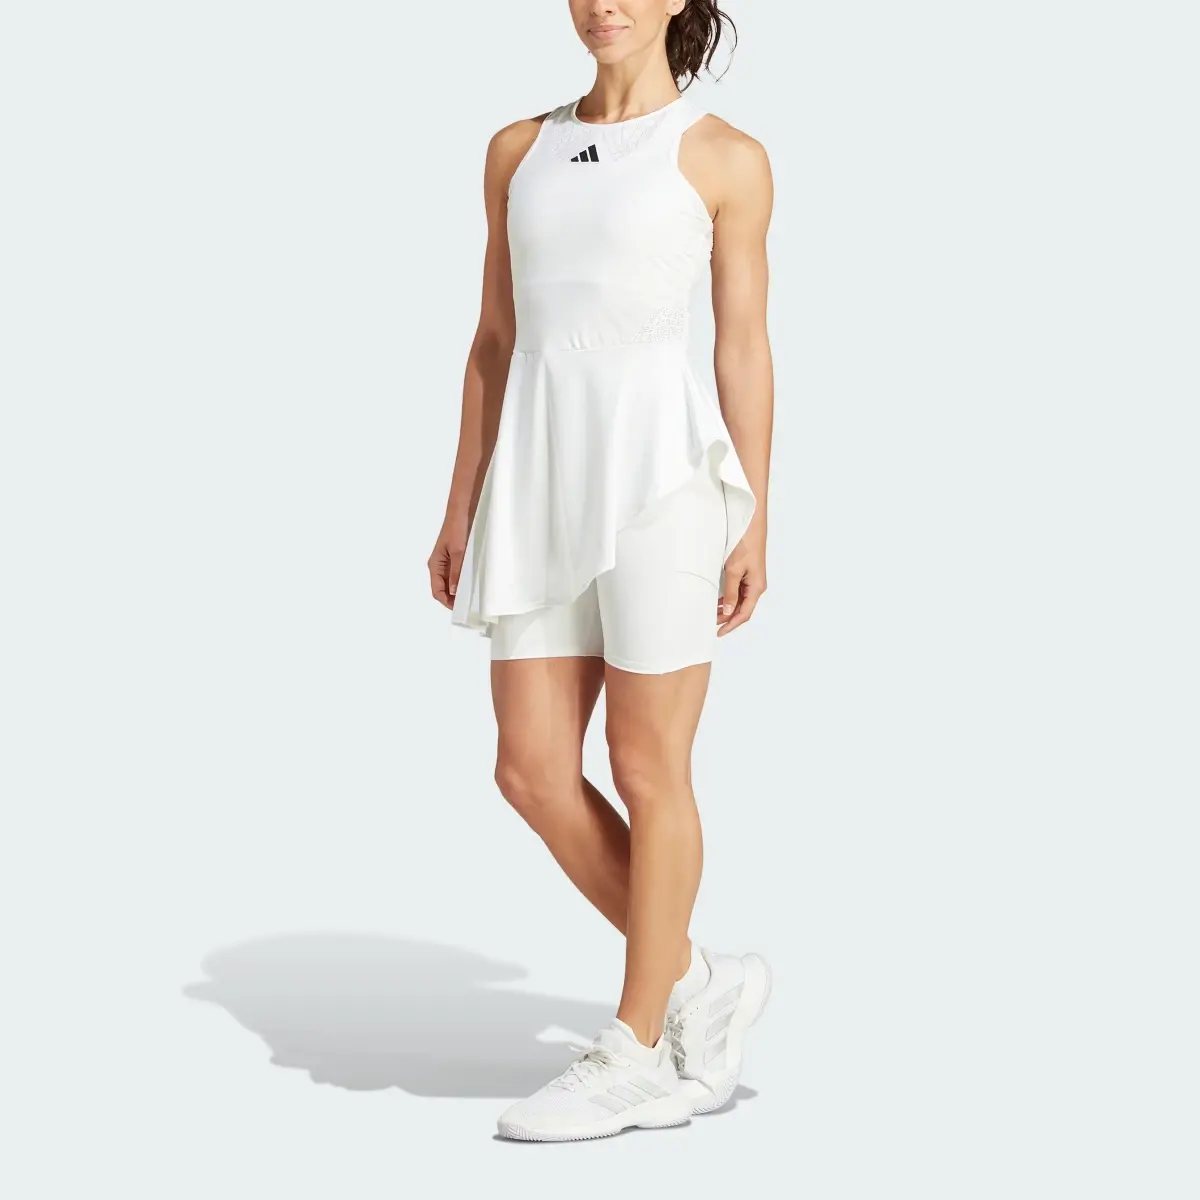 Adidas AEROREADY Pro Tennis Dress. 1